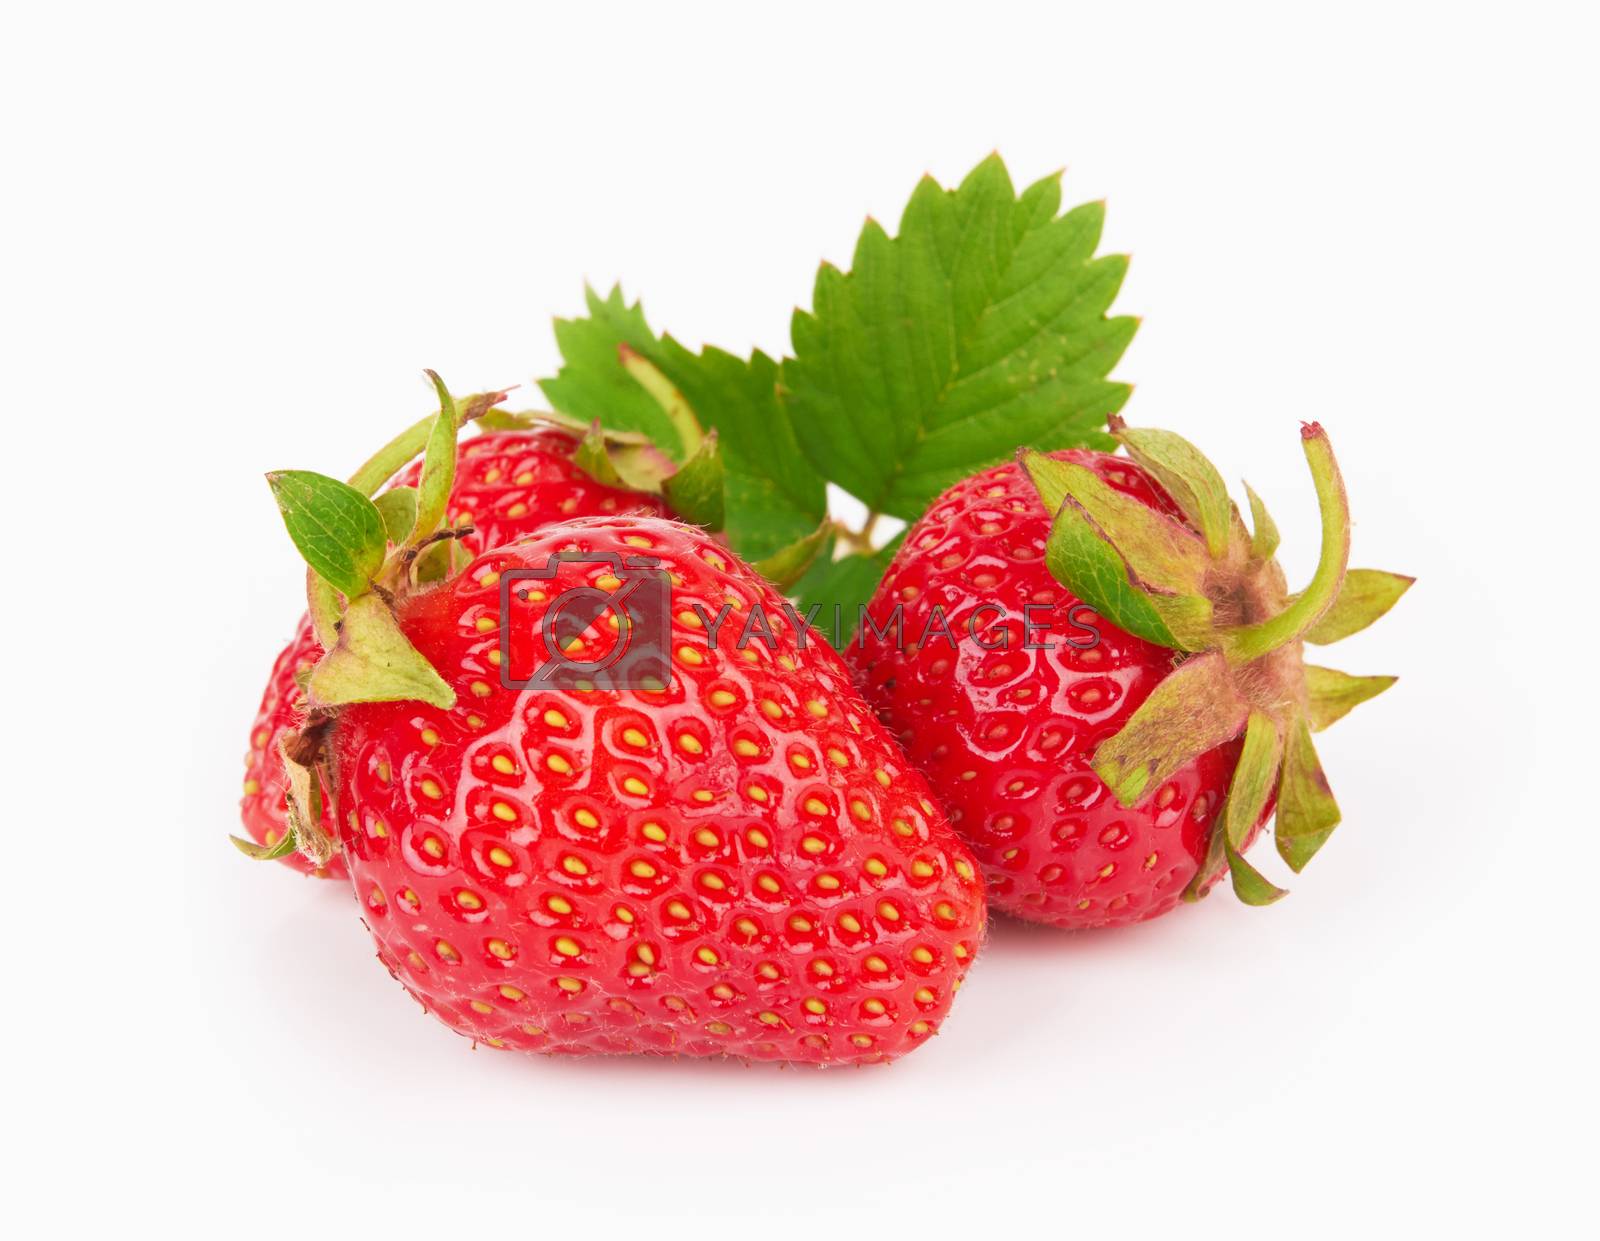 Royalty free image of strawberries by pioneer111